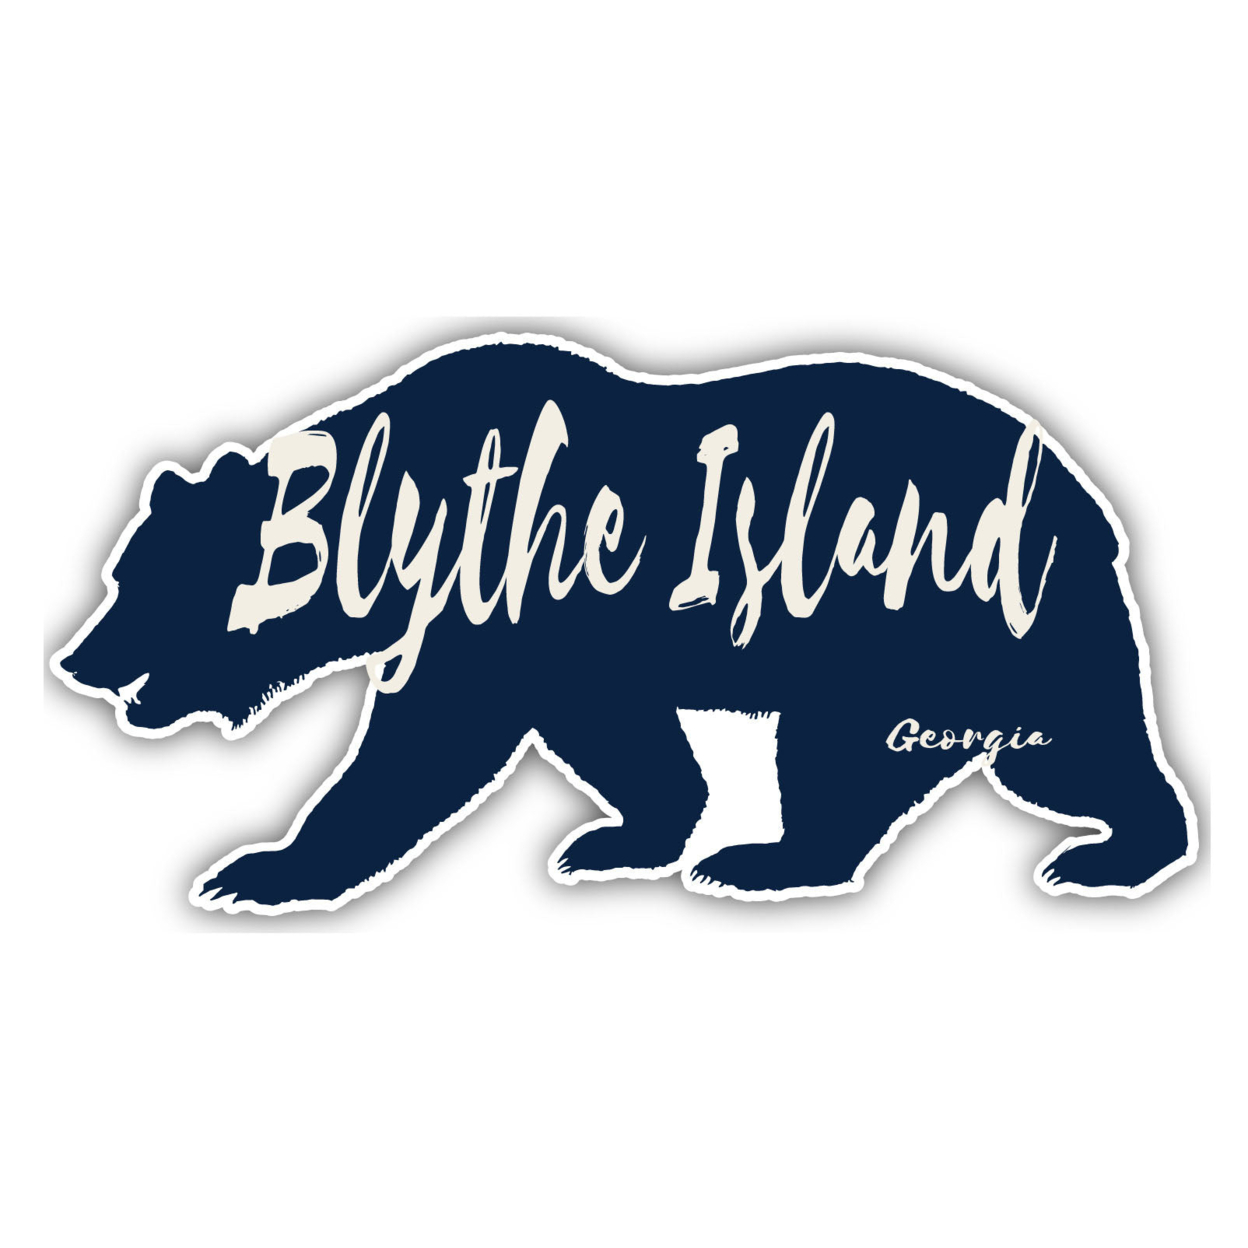 Blythe Island Georgia Souvenir Decorative Stickers (Choose Theme And Size) - 4-Pack, 6-Inch, Camp Life